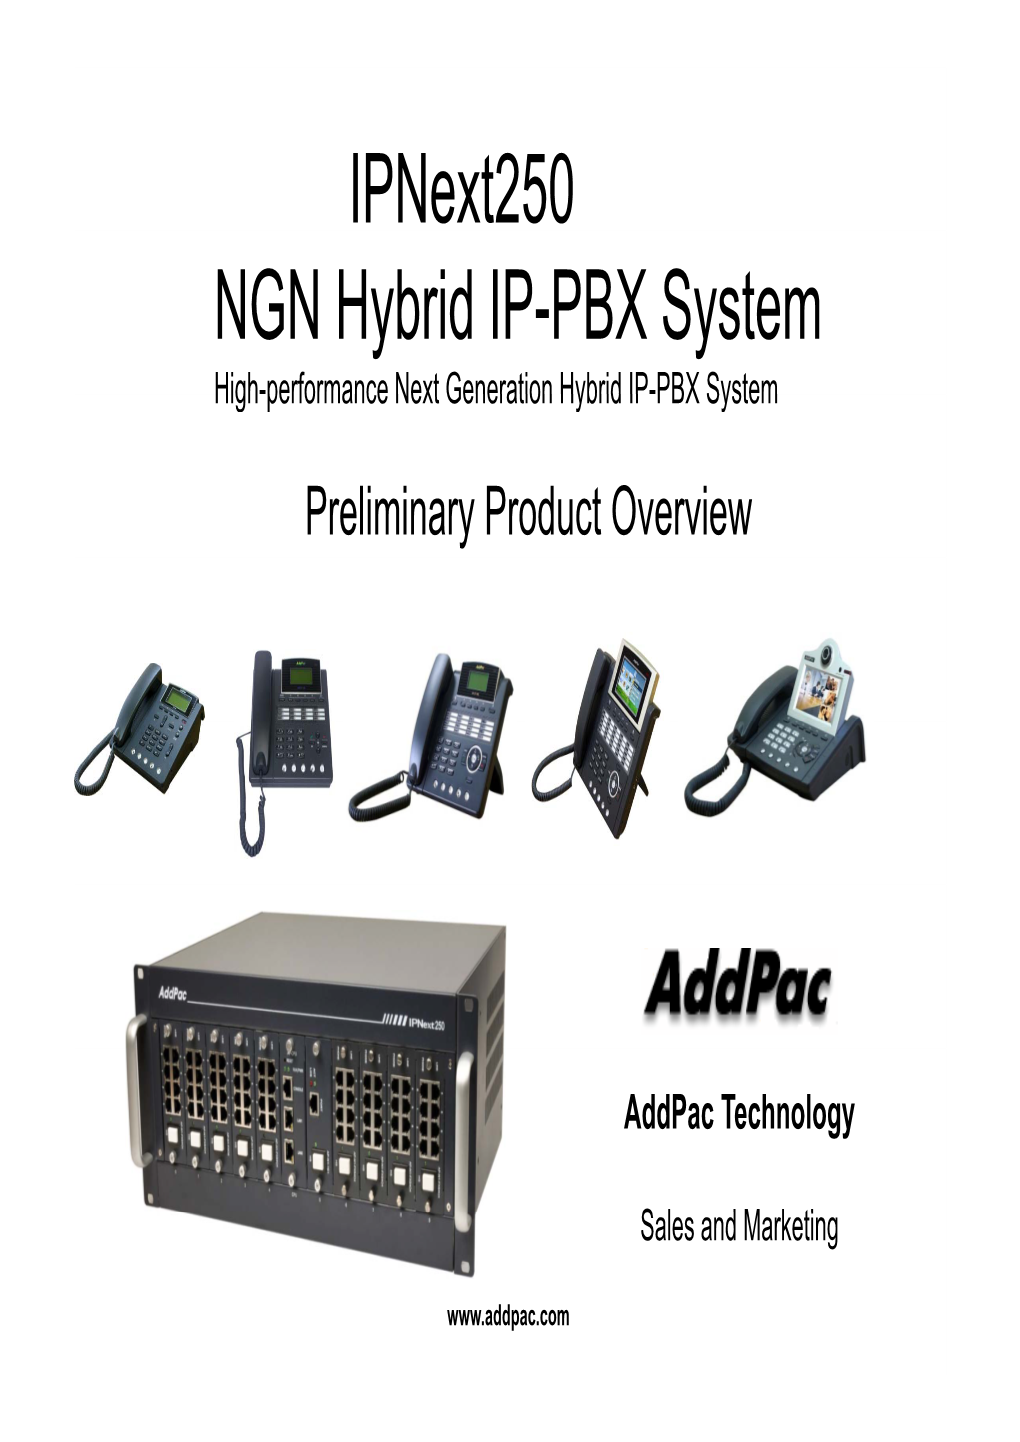 Ipnext250 NGN Hybrid IP-PBX System High-Performance Next Generation Hybrid IP-PBX System